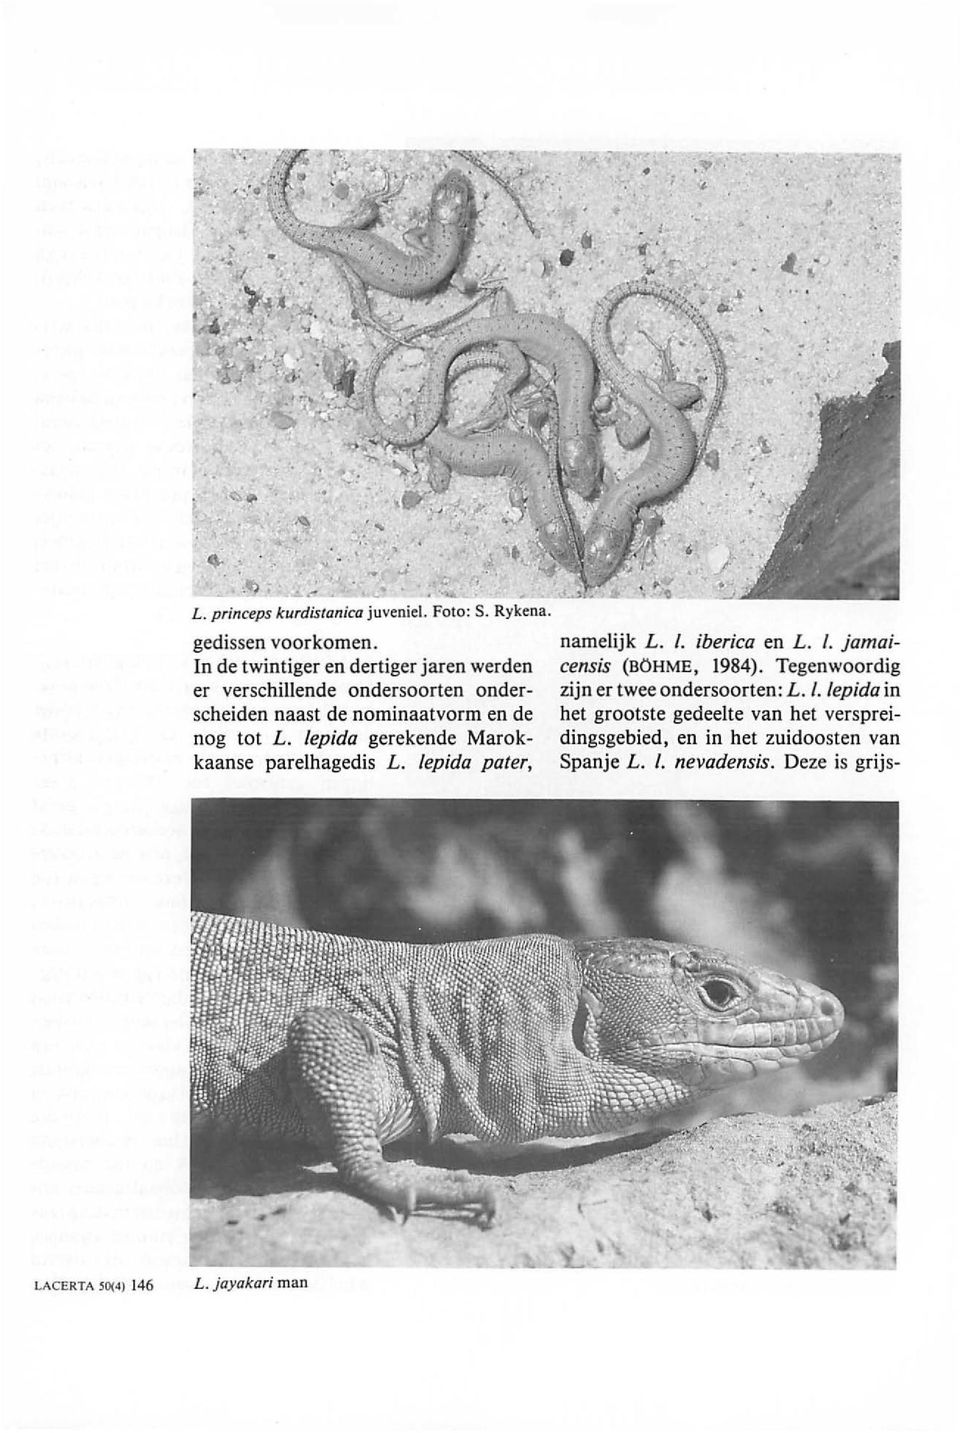 lepida gerekende Marokkaanse parelhagedis L. lepida pater, namelijk L. I. iberica en L. I. jamaicensis (BOHME, 1984).